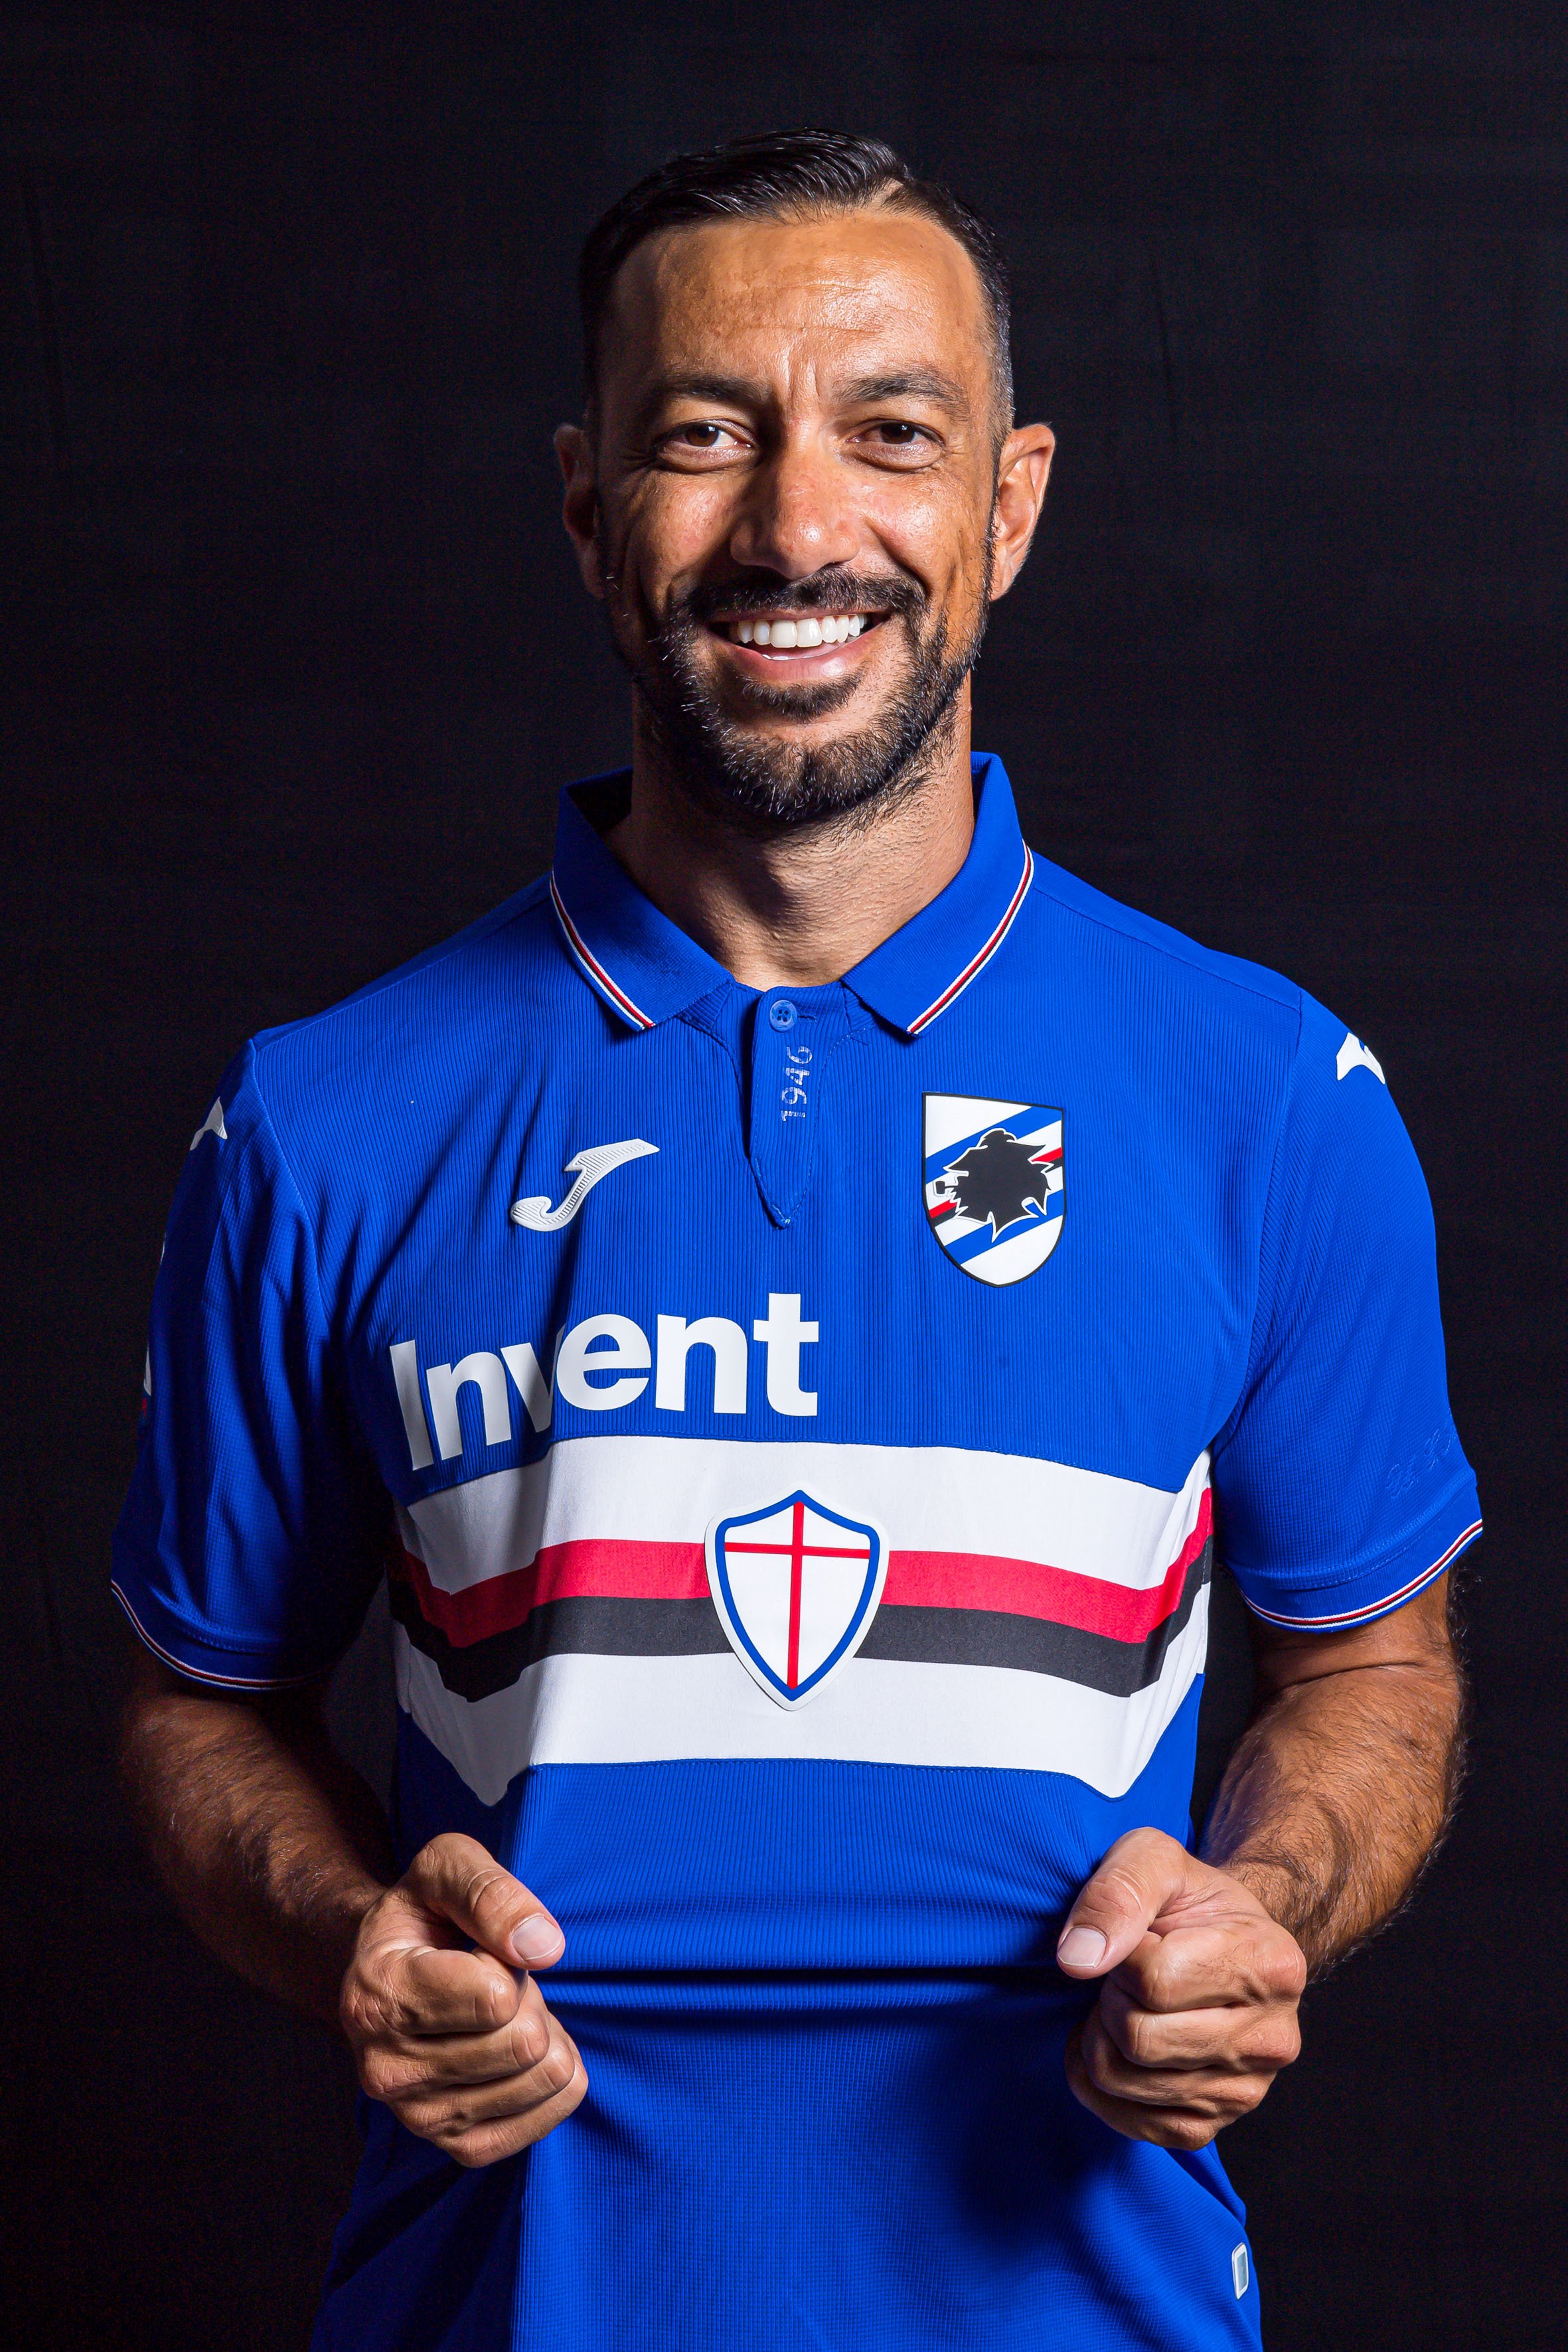 Sampdoria English on Twitter: "👕 U.C. #Sampdoria and #JOMA present home jersey! https://t.co/myH9enfTkA" / Twitter